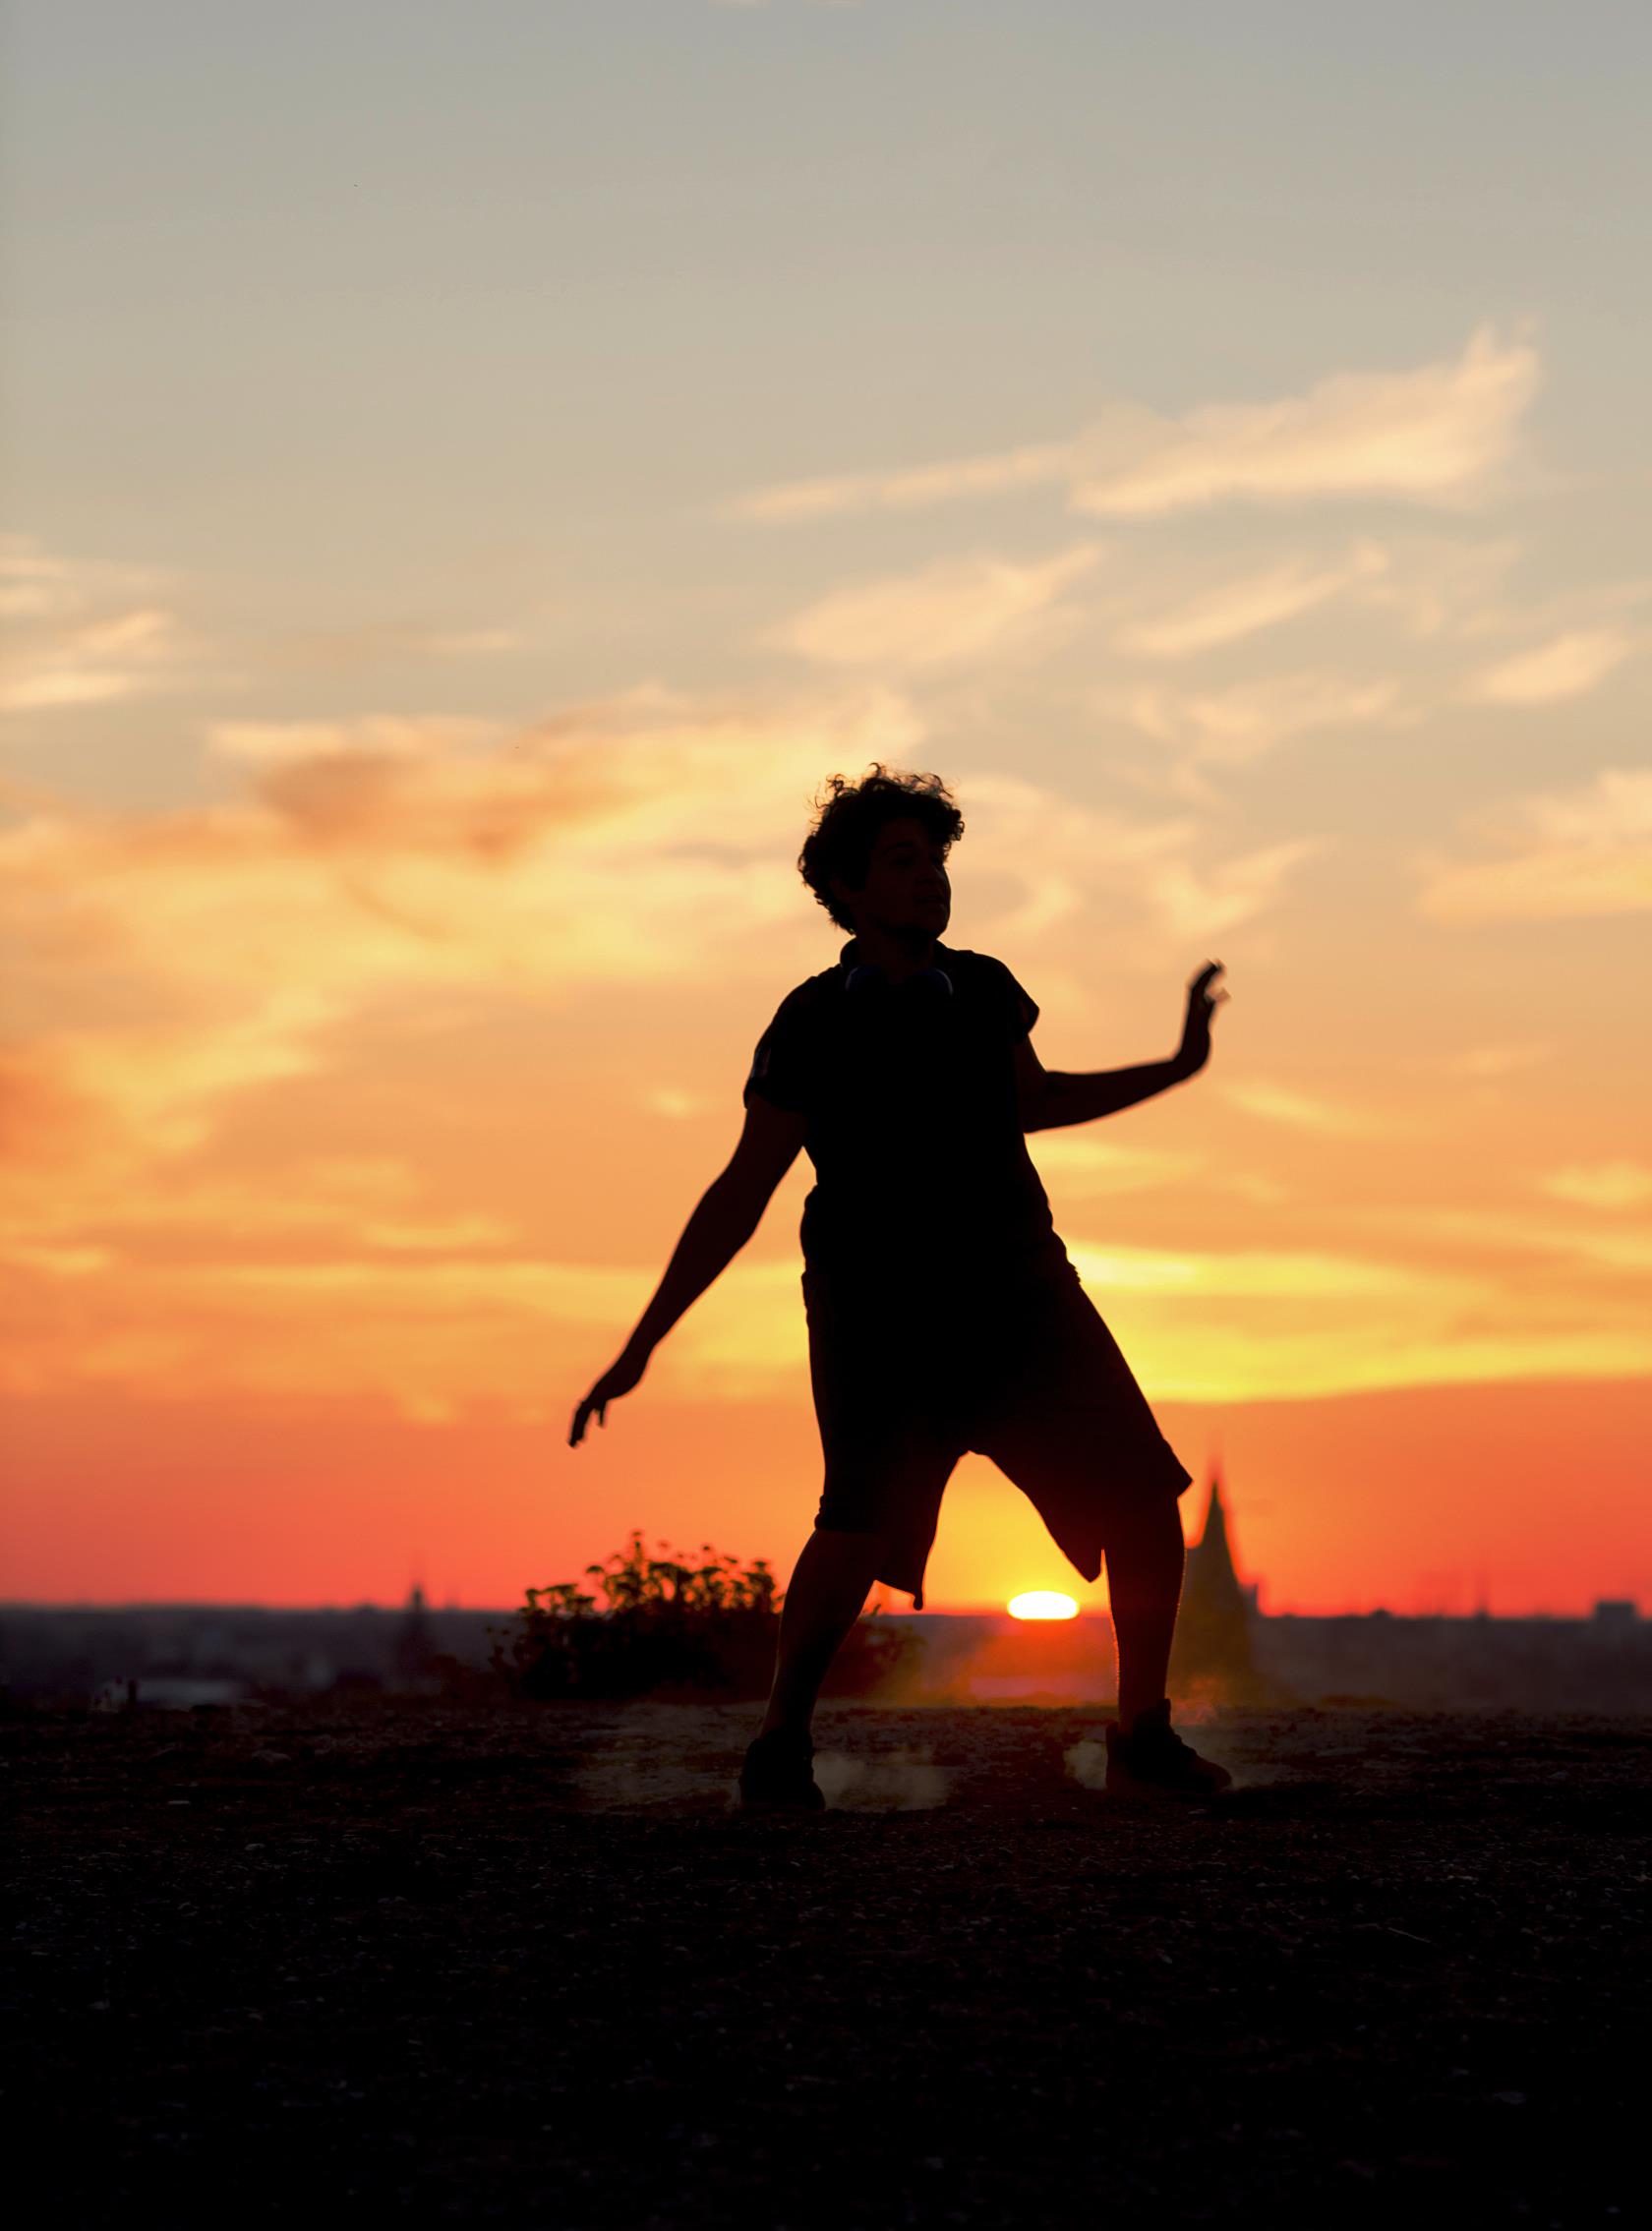 En ungdom dansar uppe på en klippa. I bakgrunden syns en stad i solnedgången.